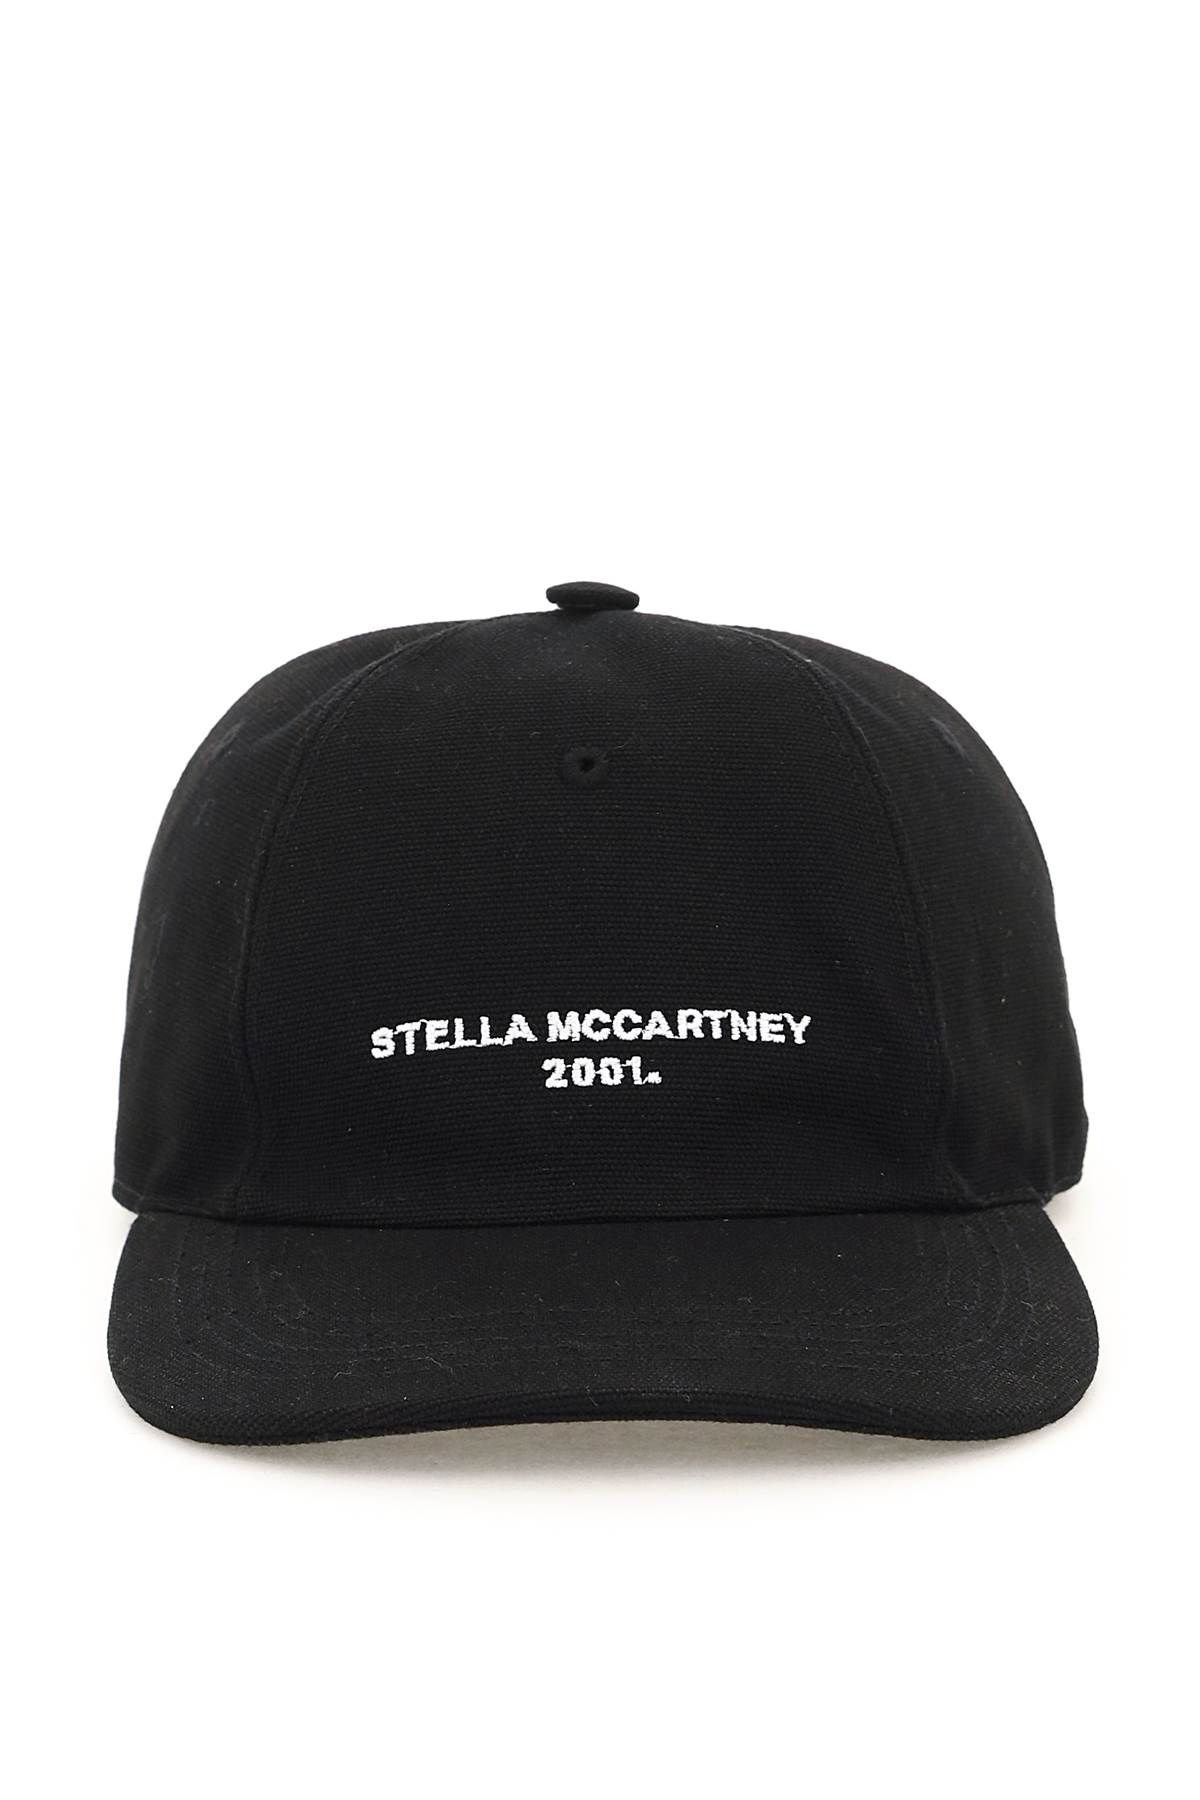 STELLA MCCARTNEY LOGO EMBROIDERED BASEBALL CAP